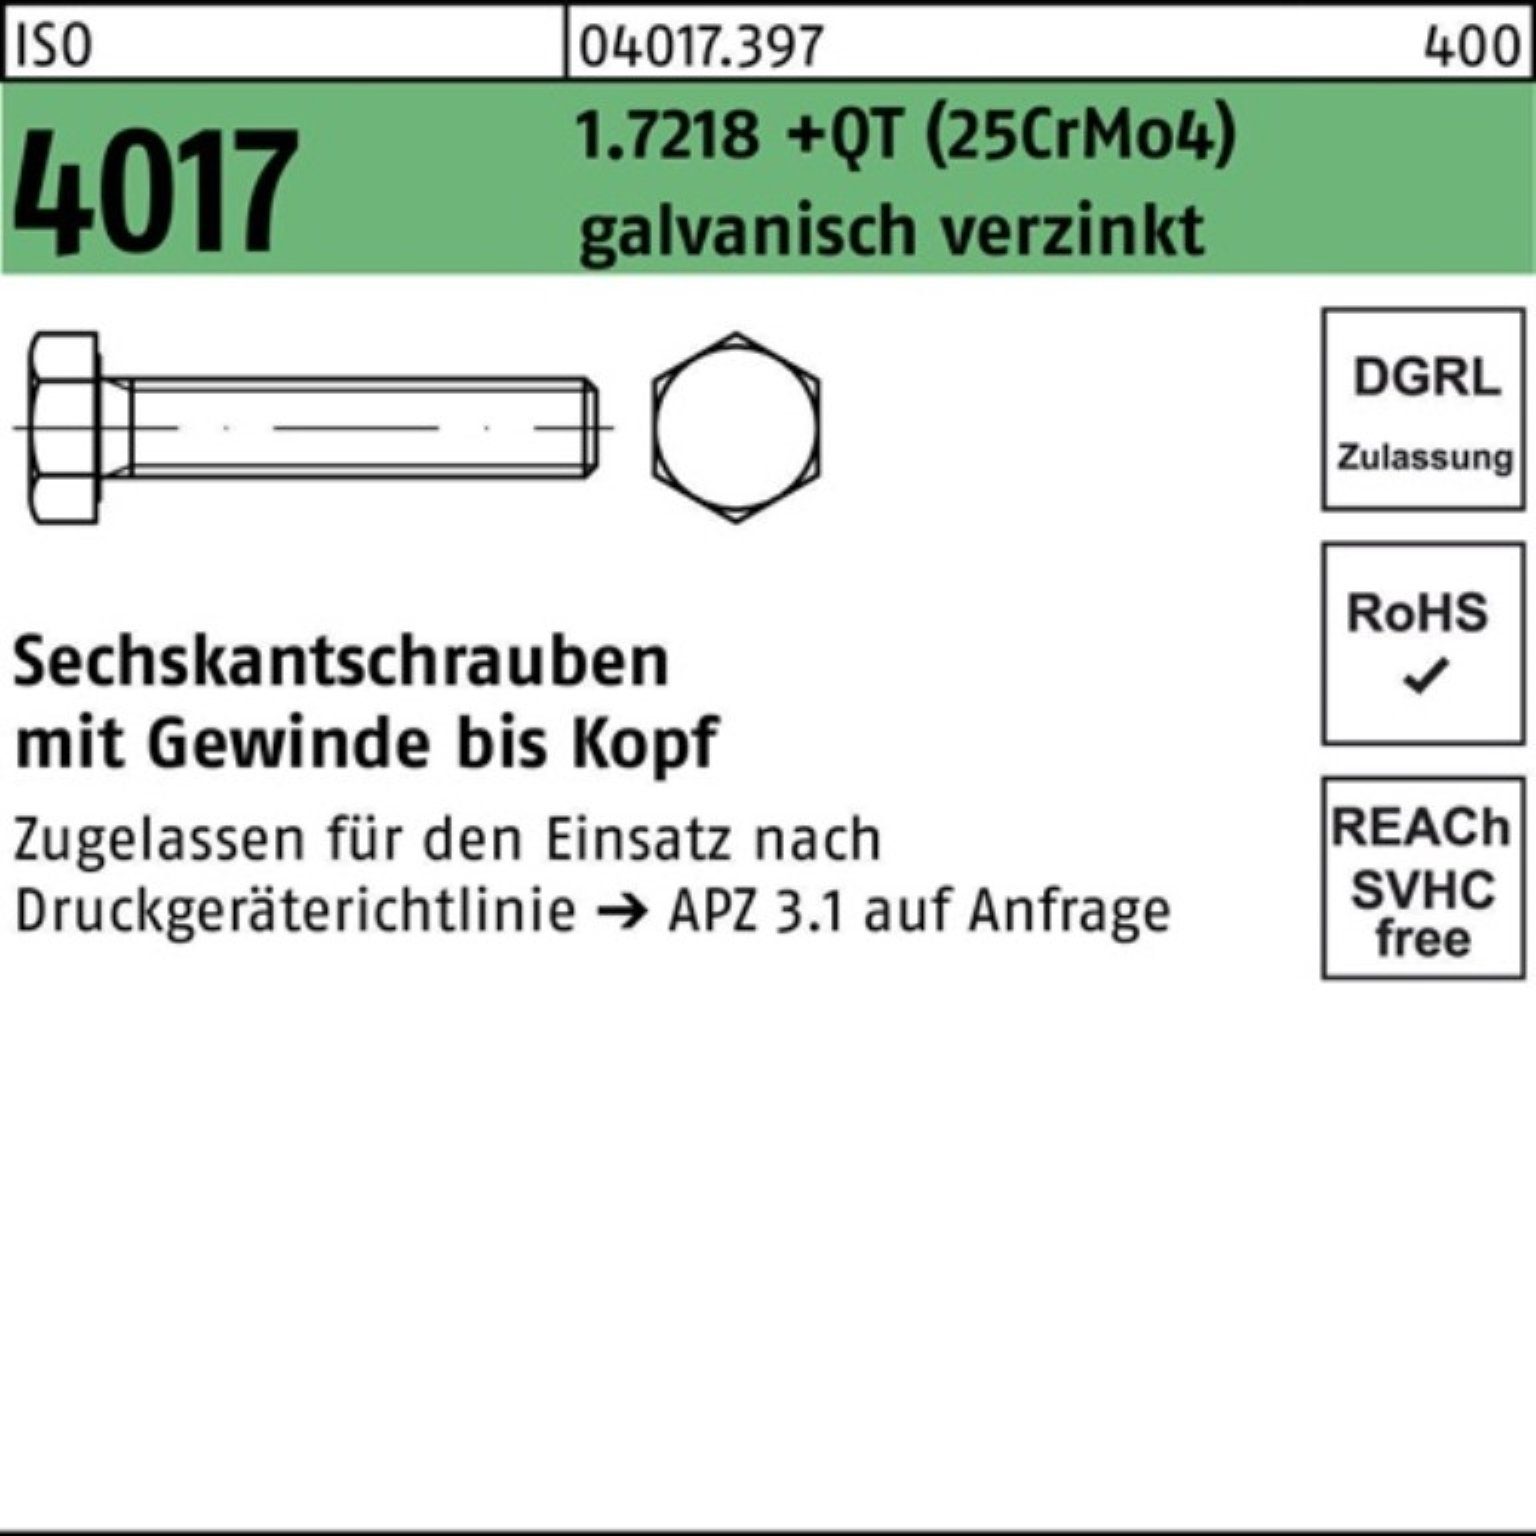 (25CrMo4) Bufab Sechskantschraube 100er ISO Sechskantschraube VG Pack +QT 1.7218 g 4017 M20x60